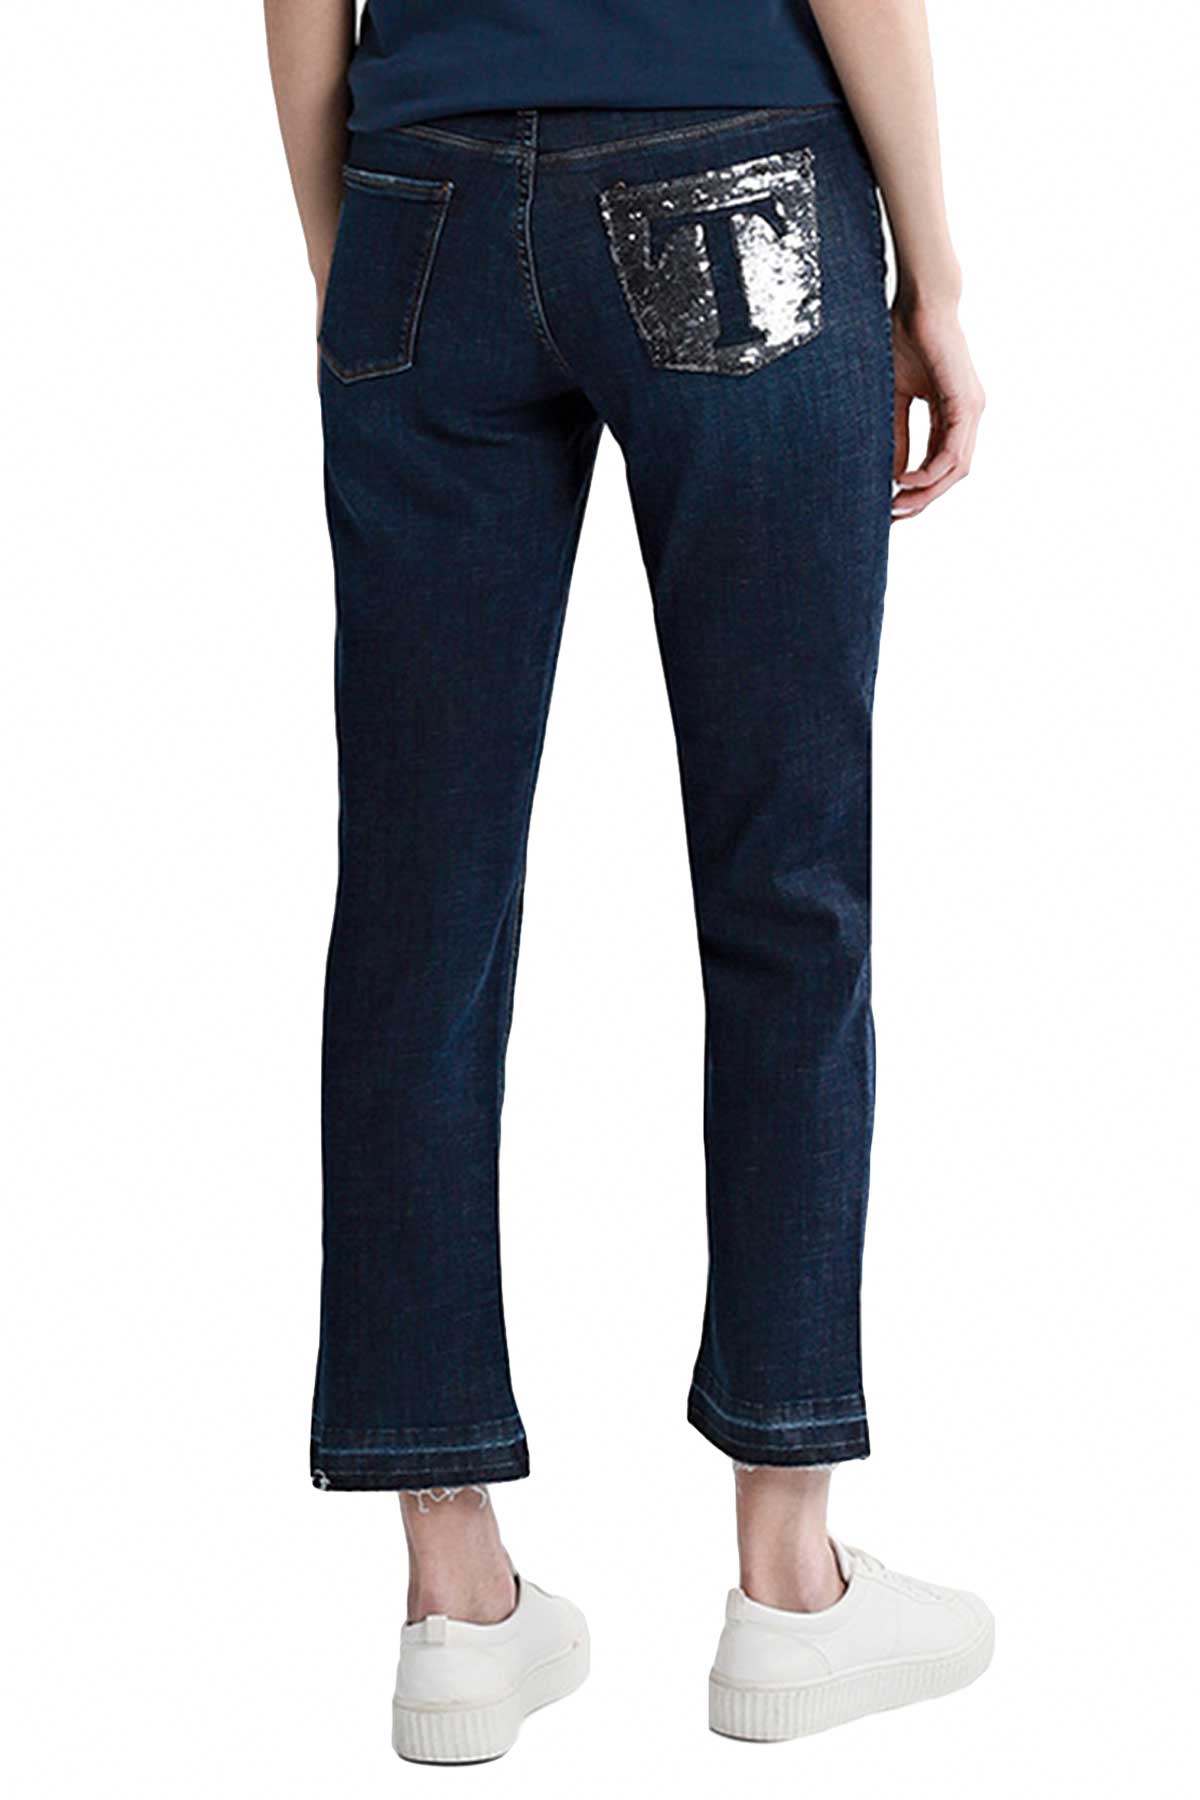 Trussardi Jeans Cropped Jeans-Libas Trendy Fashion Store